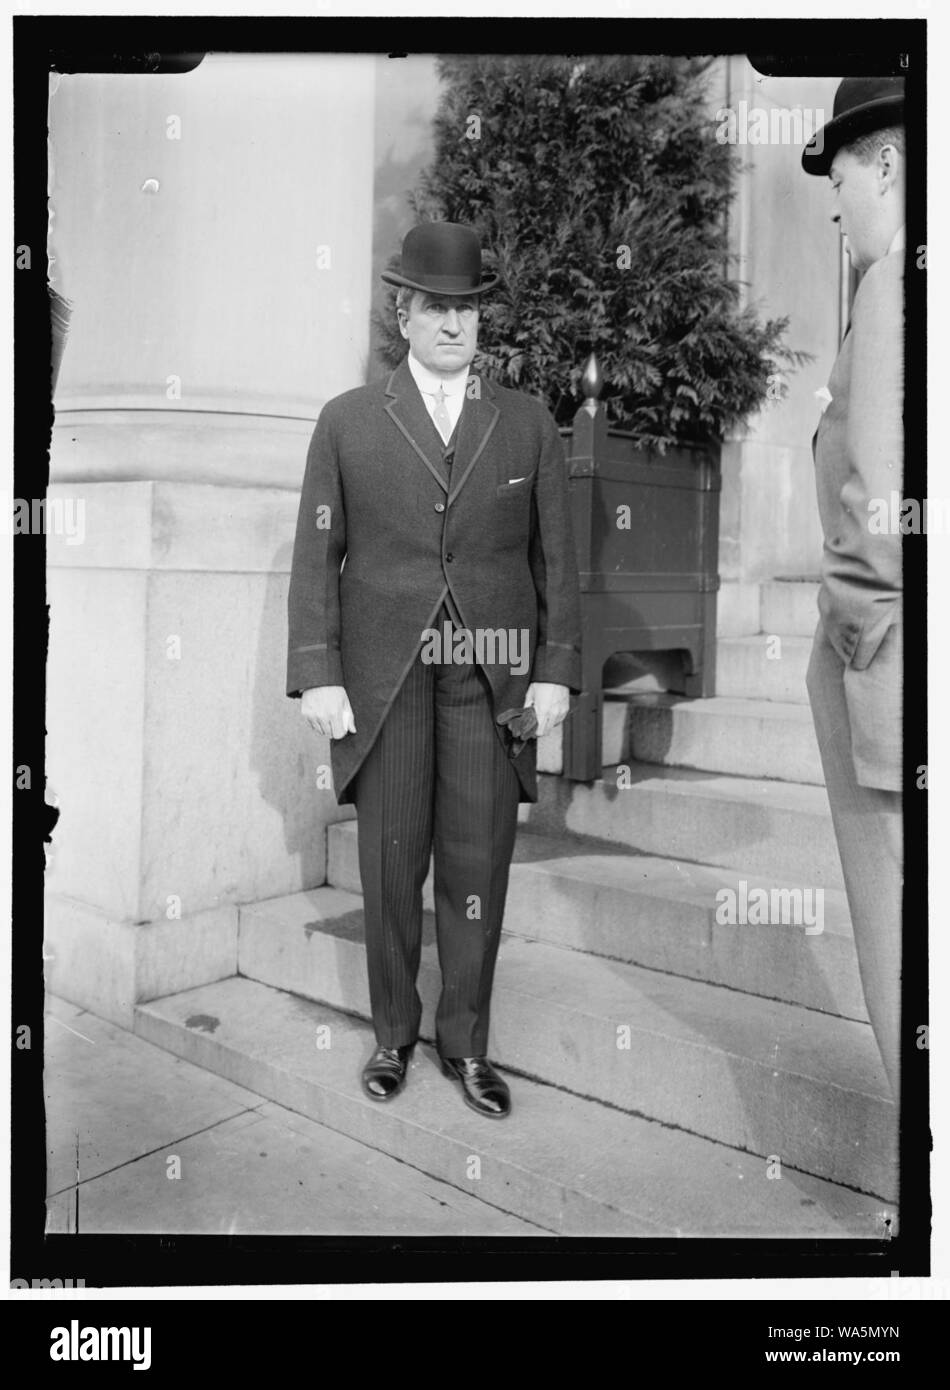 DIX, JOHN A. GOVERNOR OF NEW YORK, 1910-1912 Stock Photo